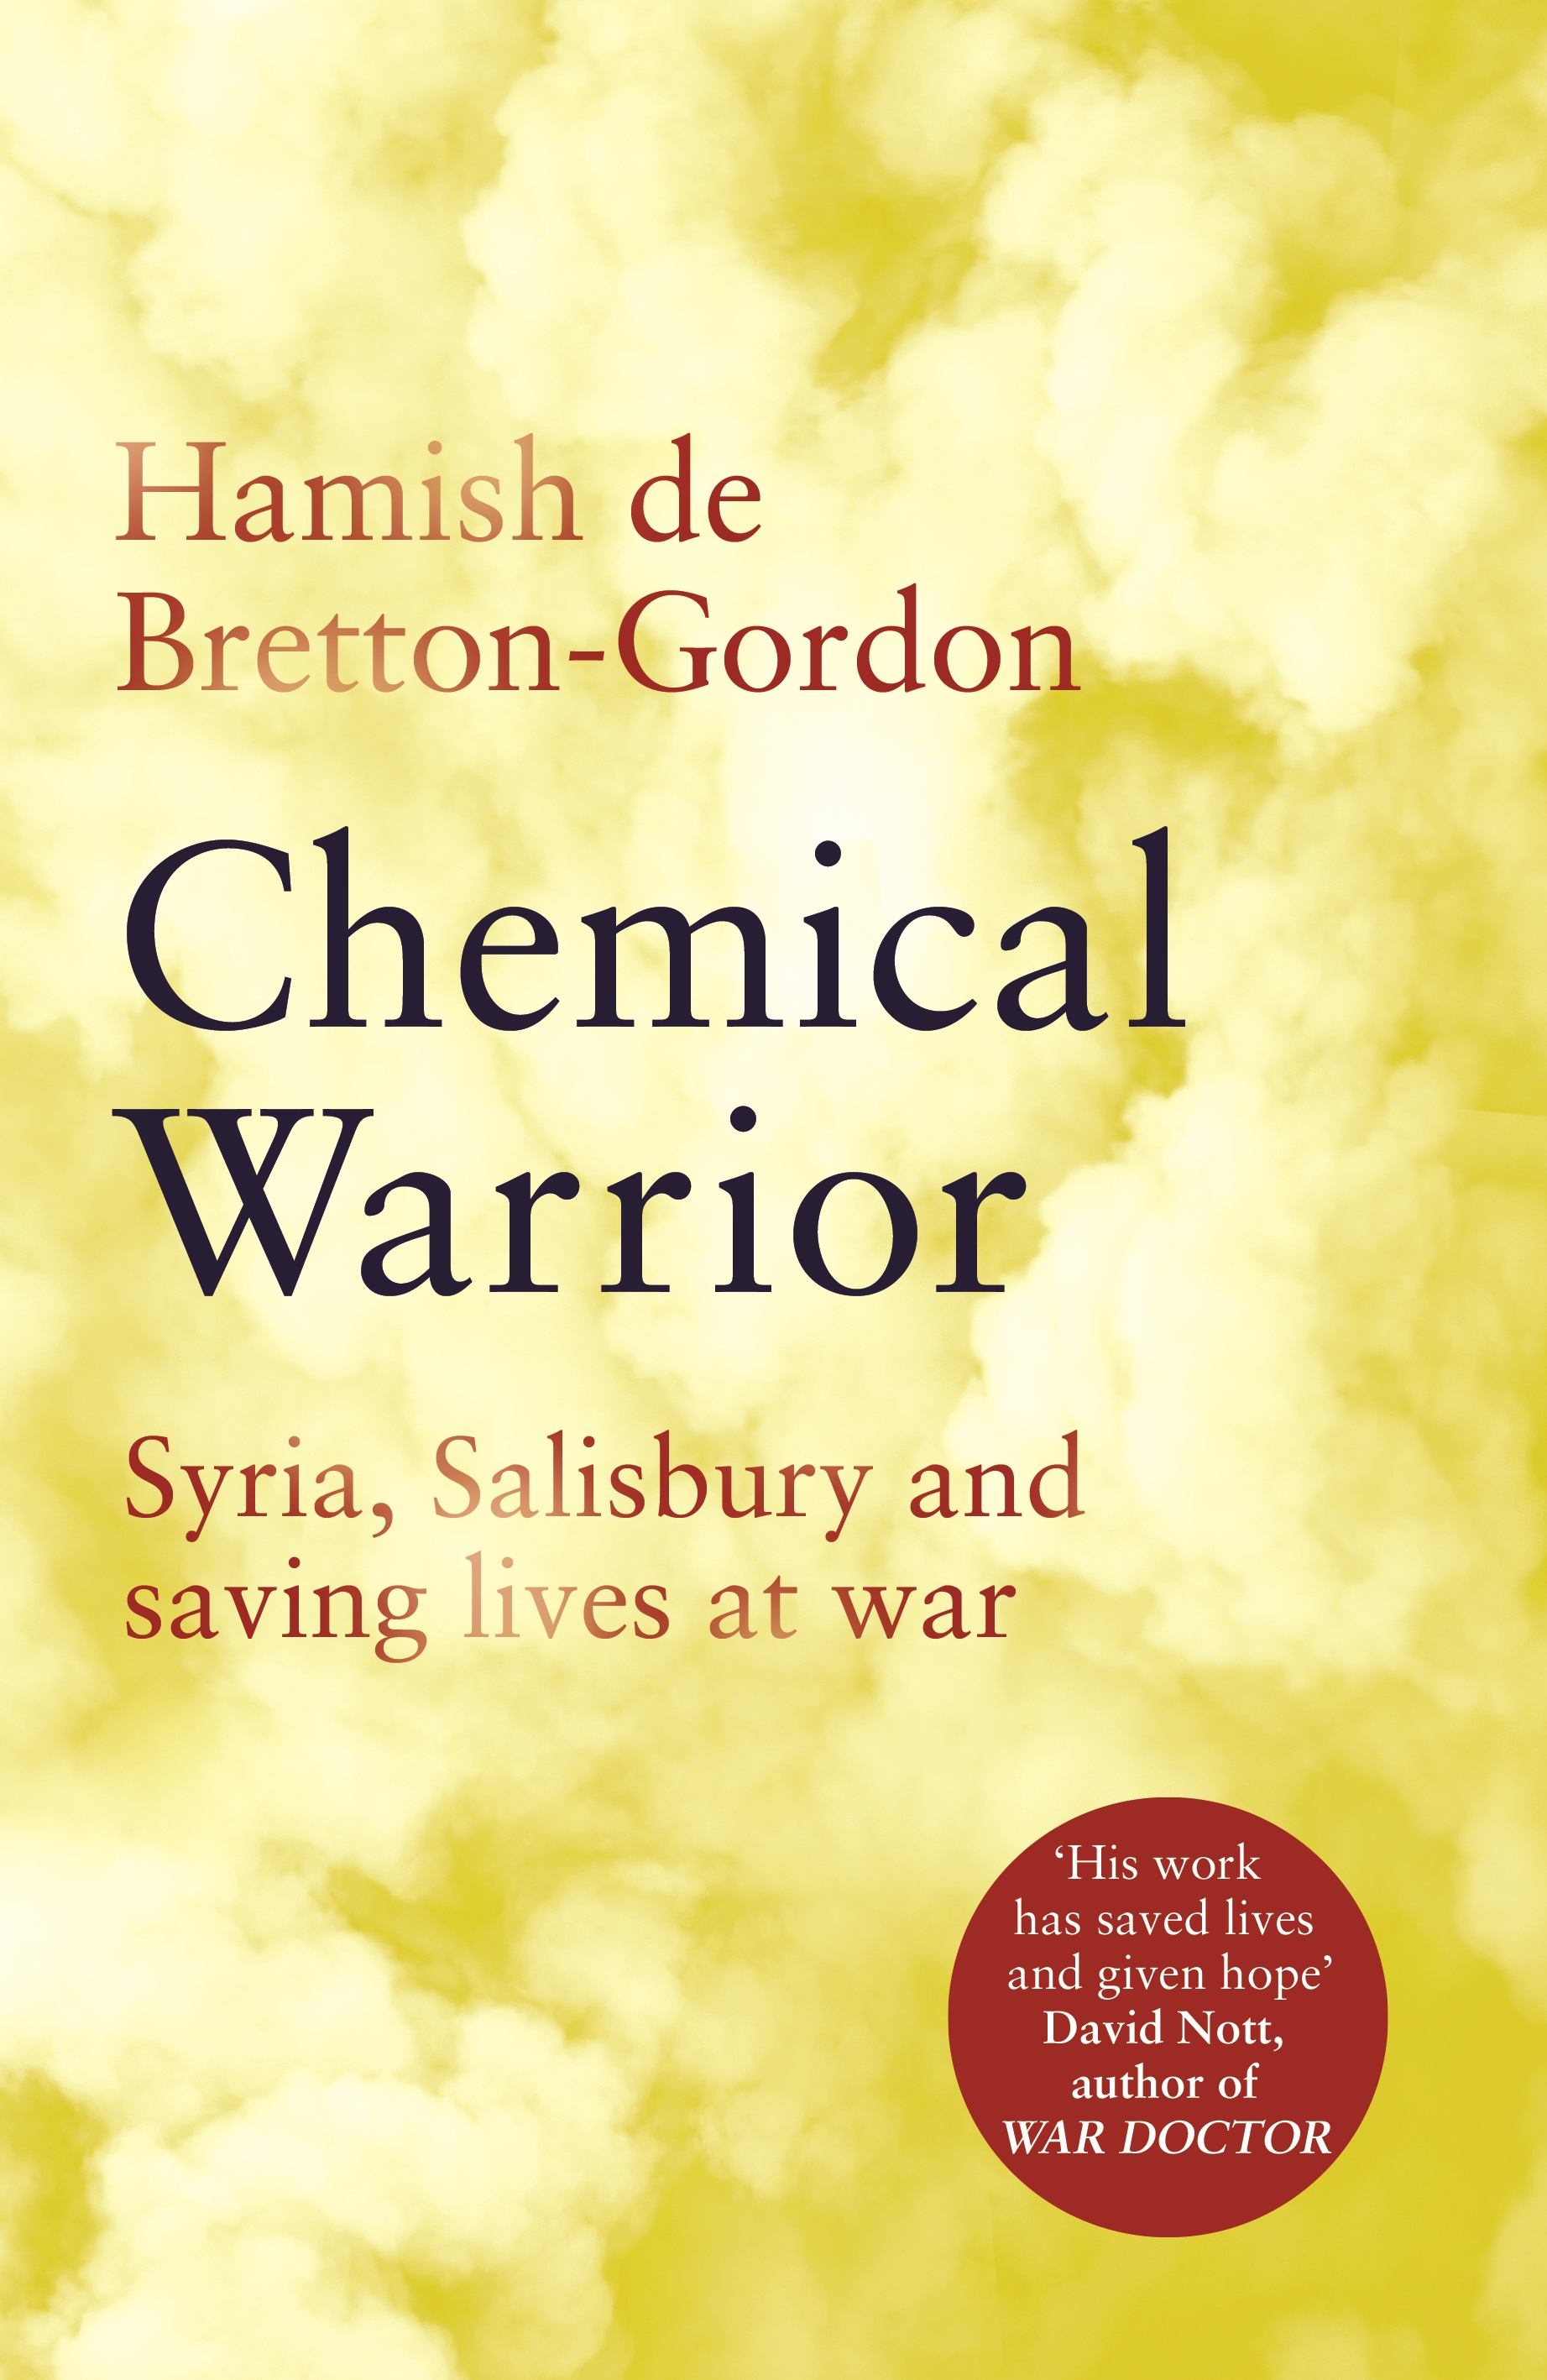 Chemical Warrior by Hamish de Bretton-Gordon